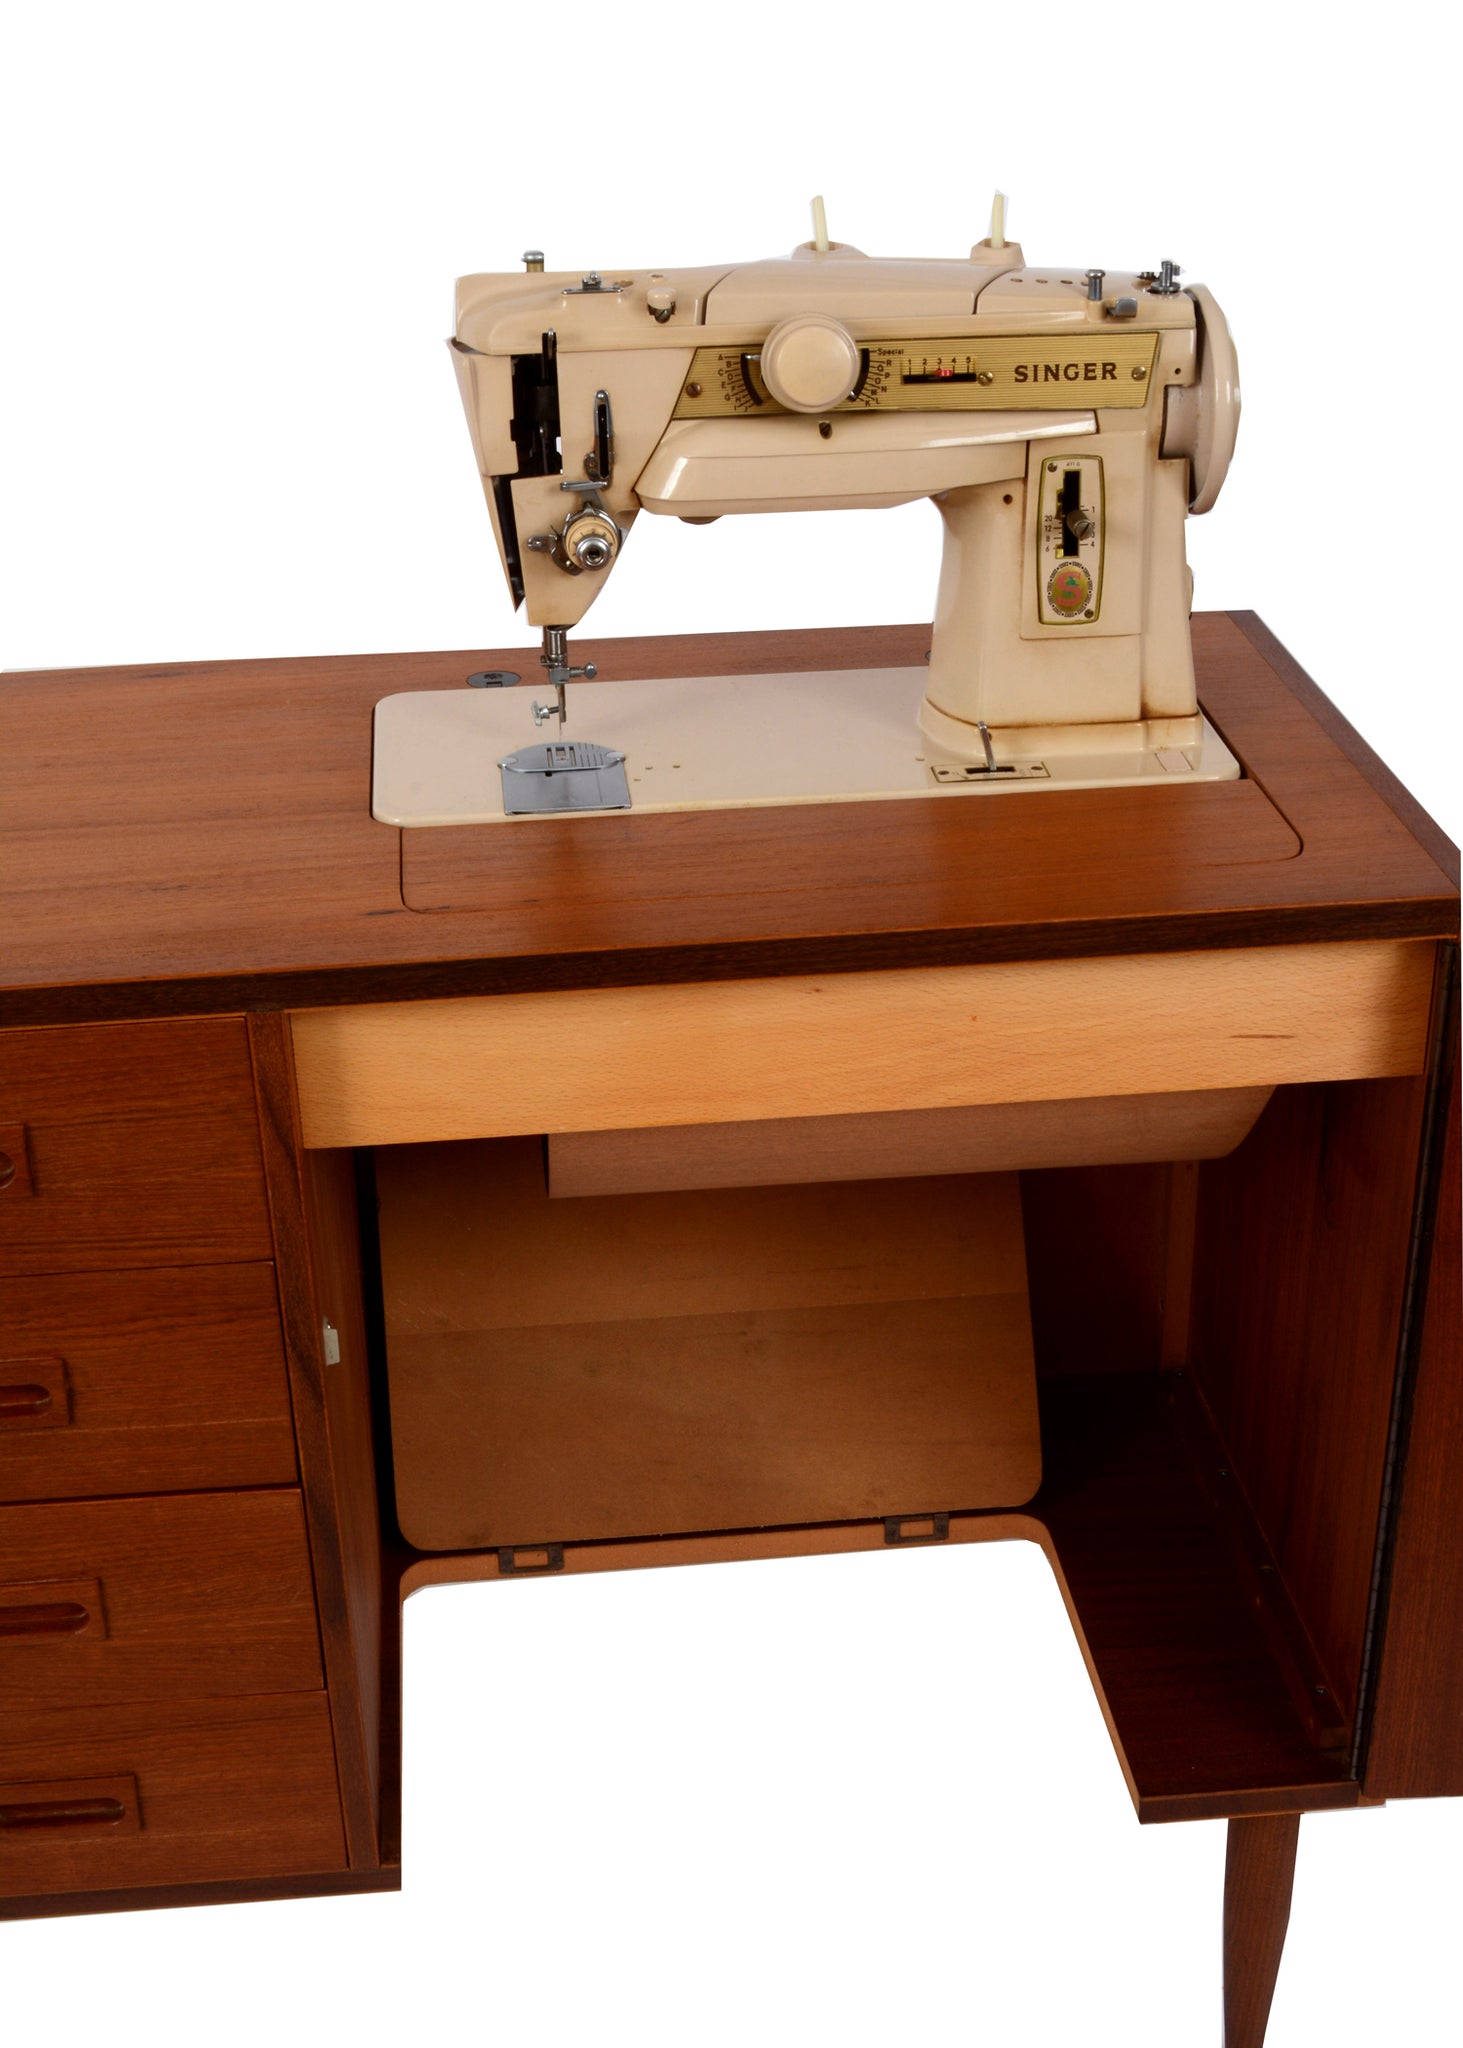 Singer sewing Machine mid century sideboard retro teak g plan ireland